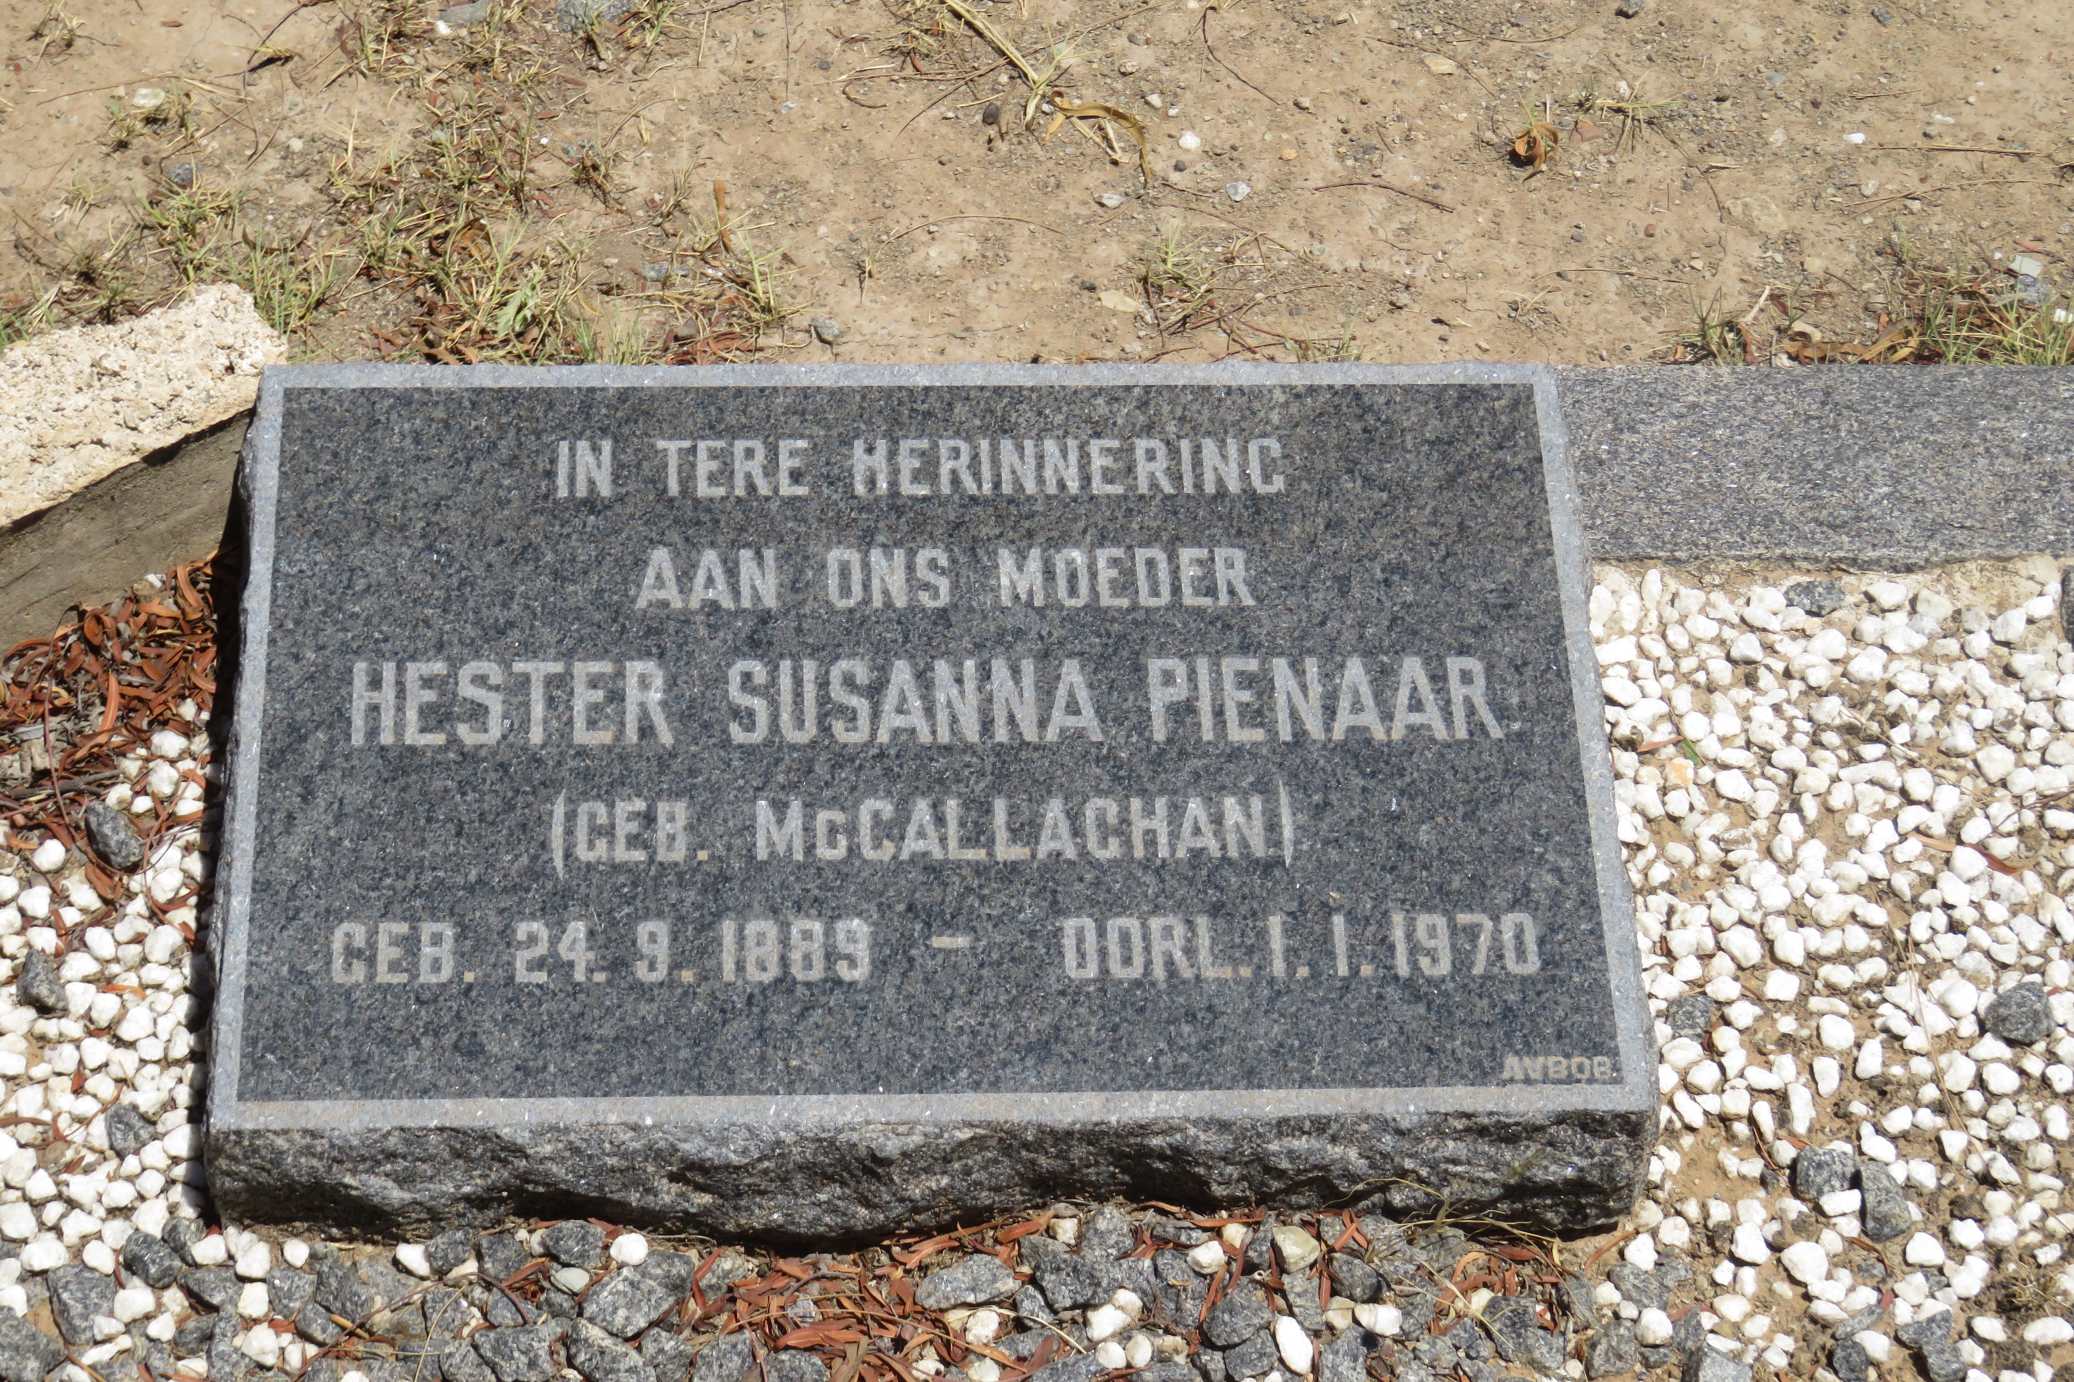 PIENAAR Hester Susanna nee McCALLAGHAN 1889-1970